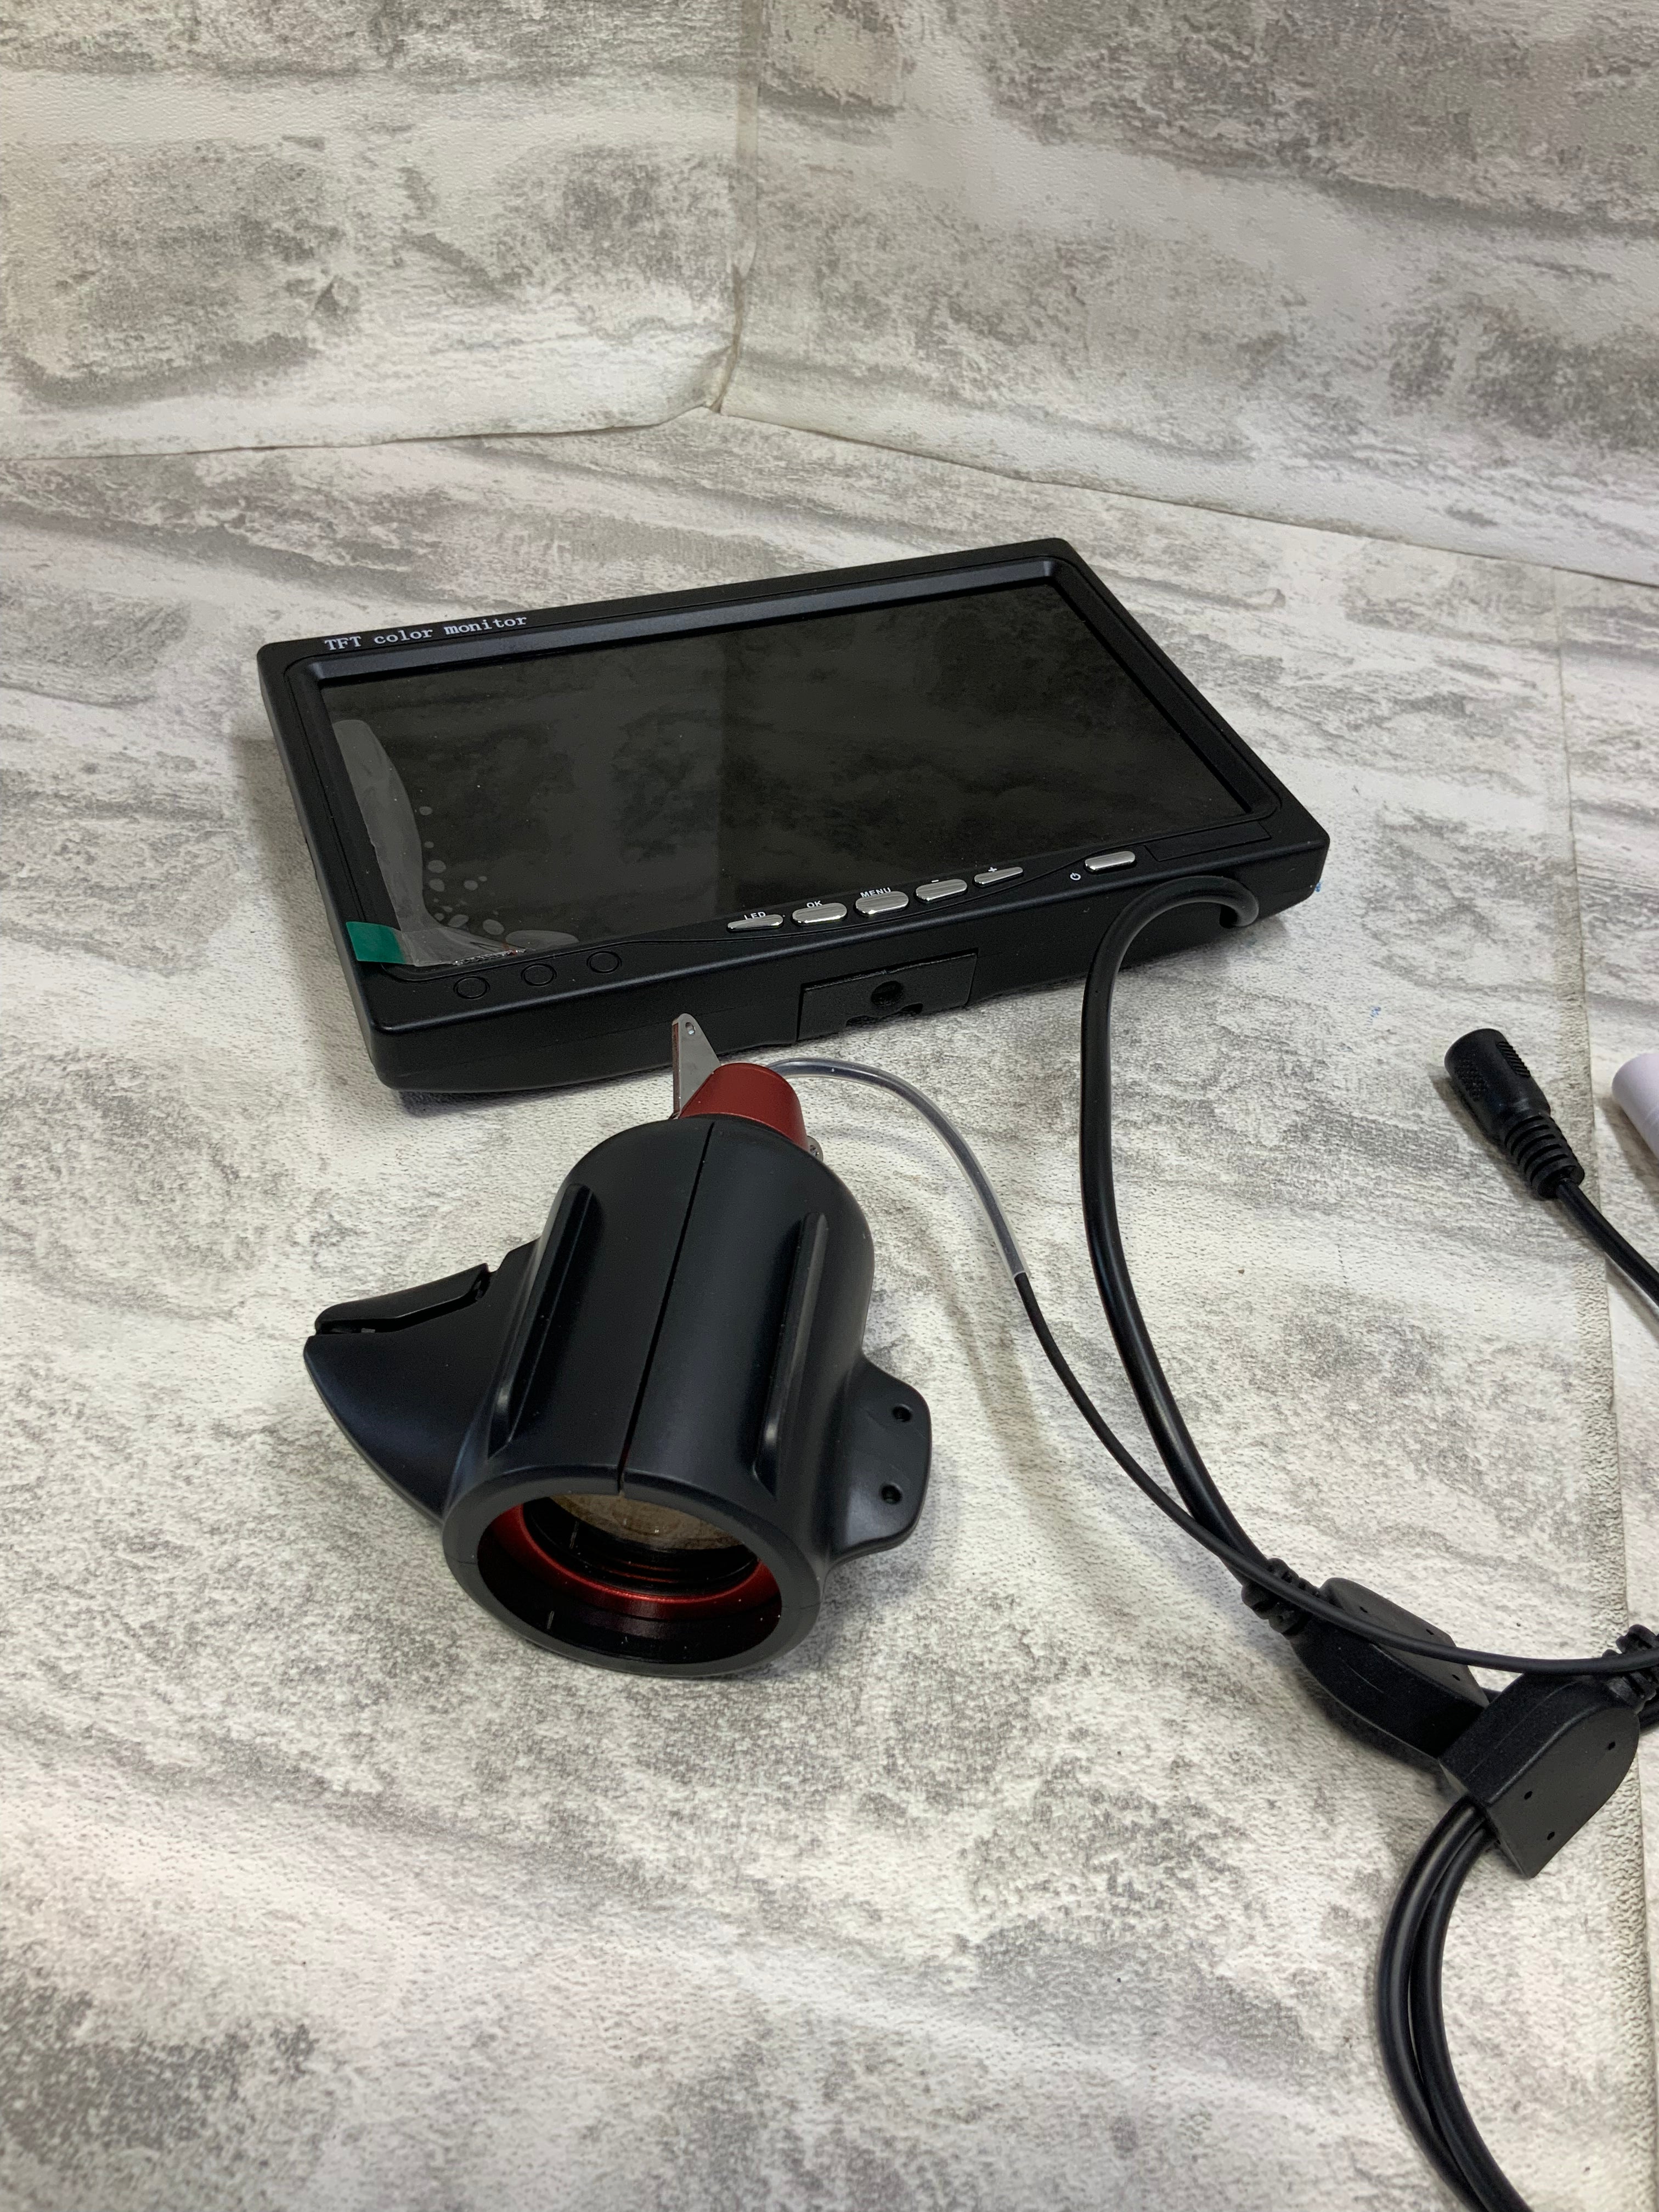 Underwater Fishing Camera- 6 inch display screen (7611546796270)